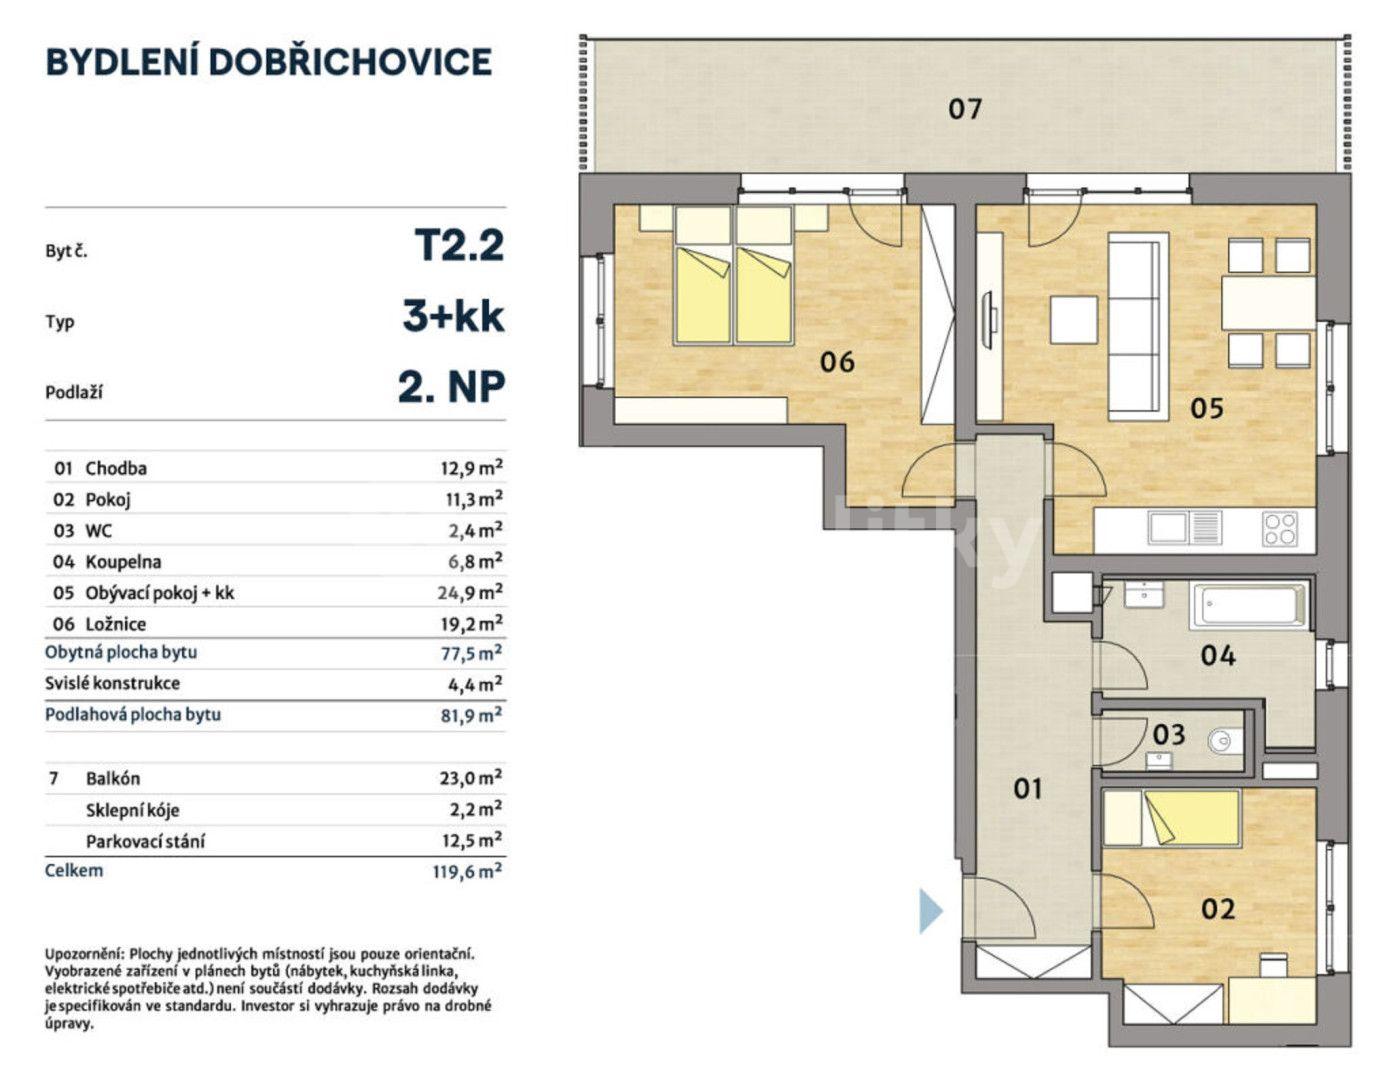 Predaj bytu 3-izbový 82 m², Pražská, Dobřichovice, Středočeský kraj